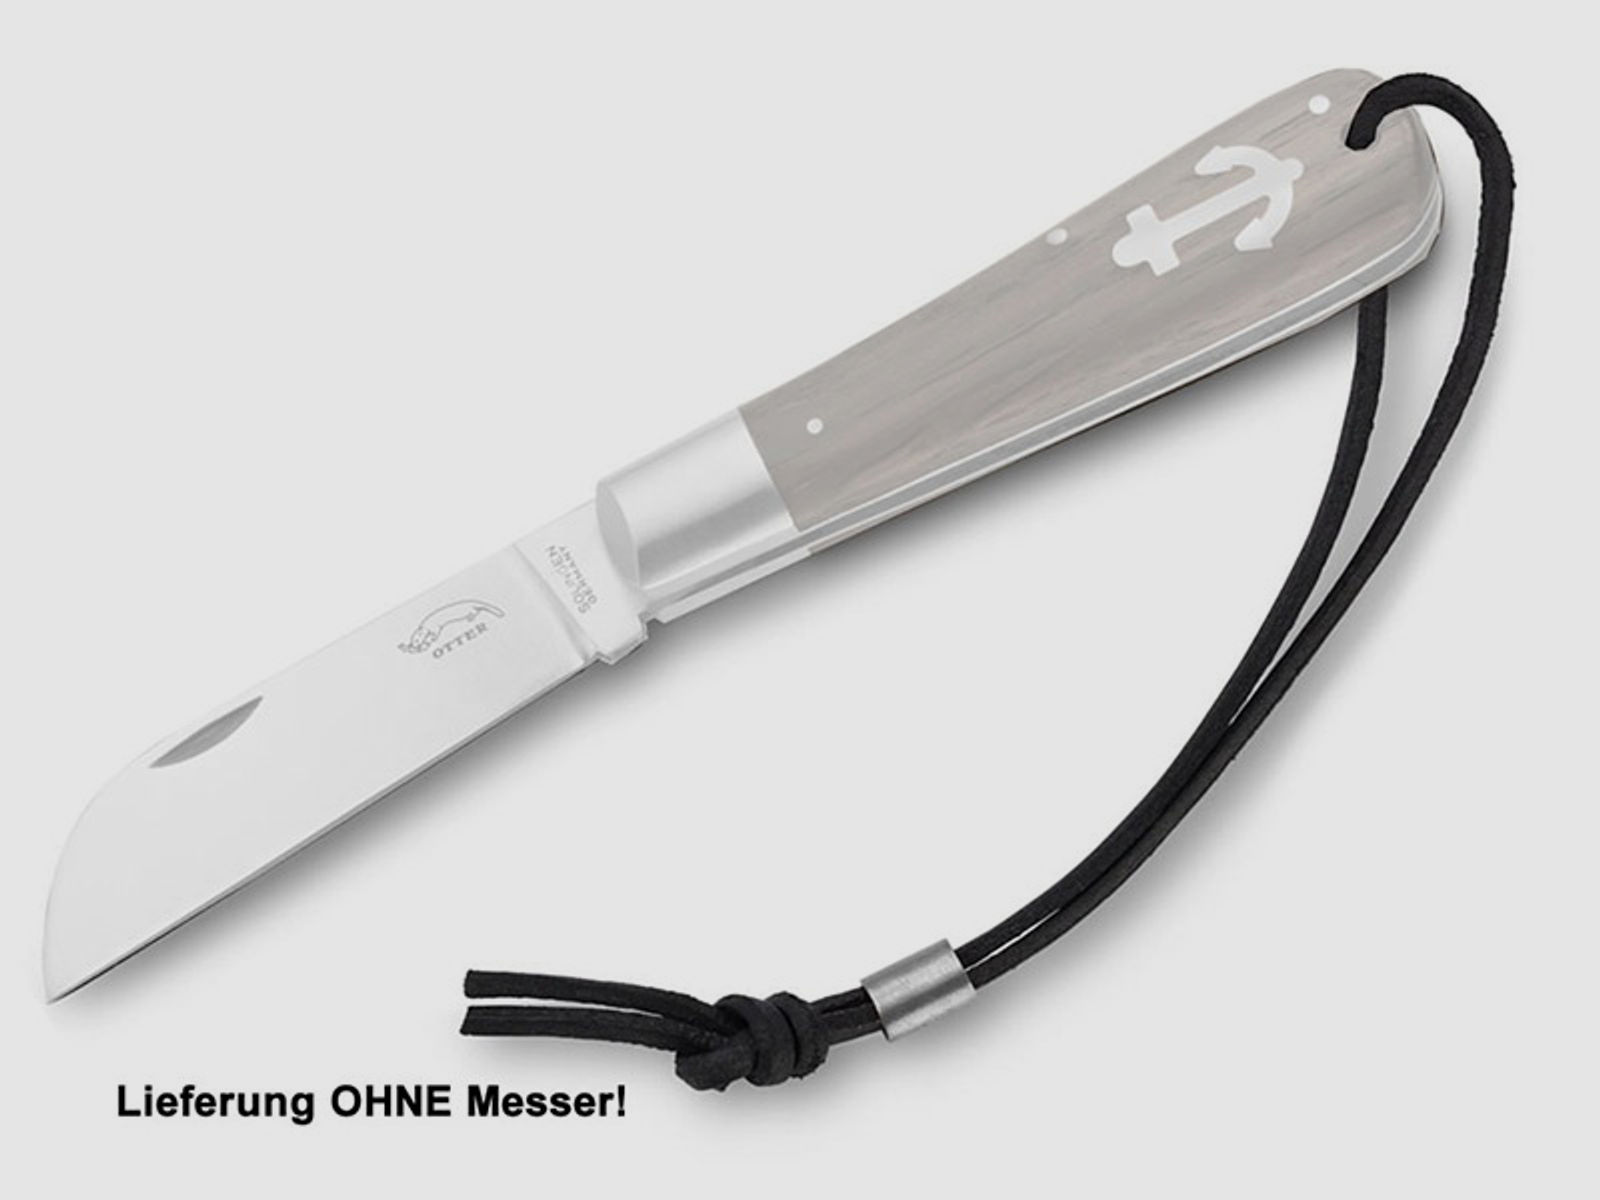 Otter Lederband fĂĽr Messer aus gegerbten Rindsleder mit EdelstahlhĂĽlse LĂ¤nge 40 cm